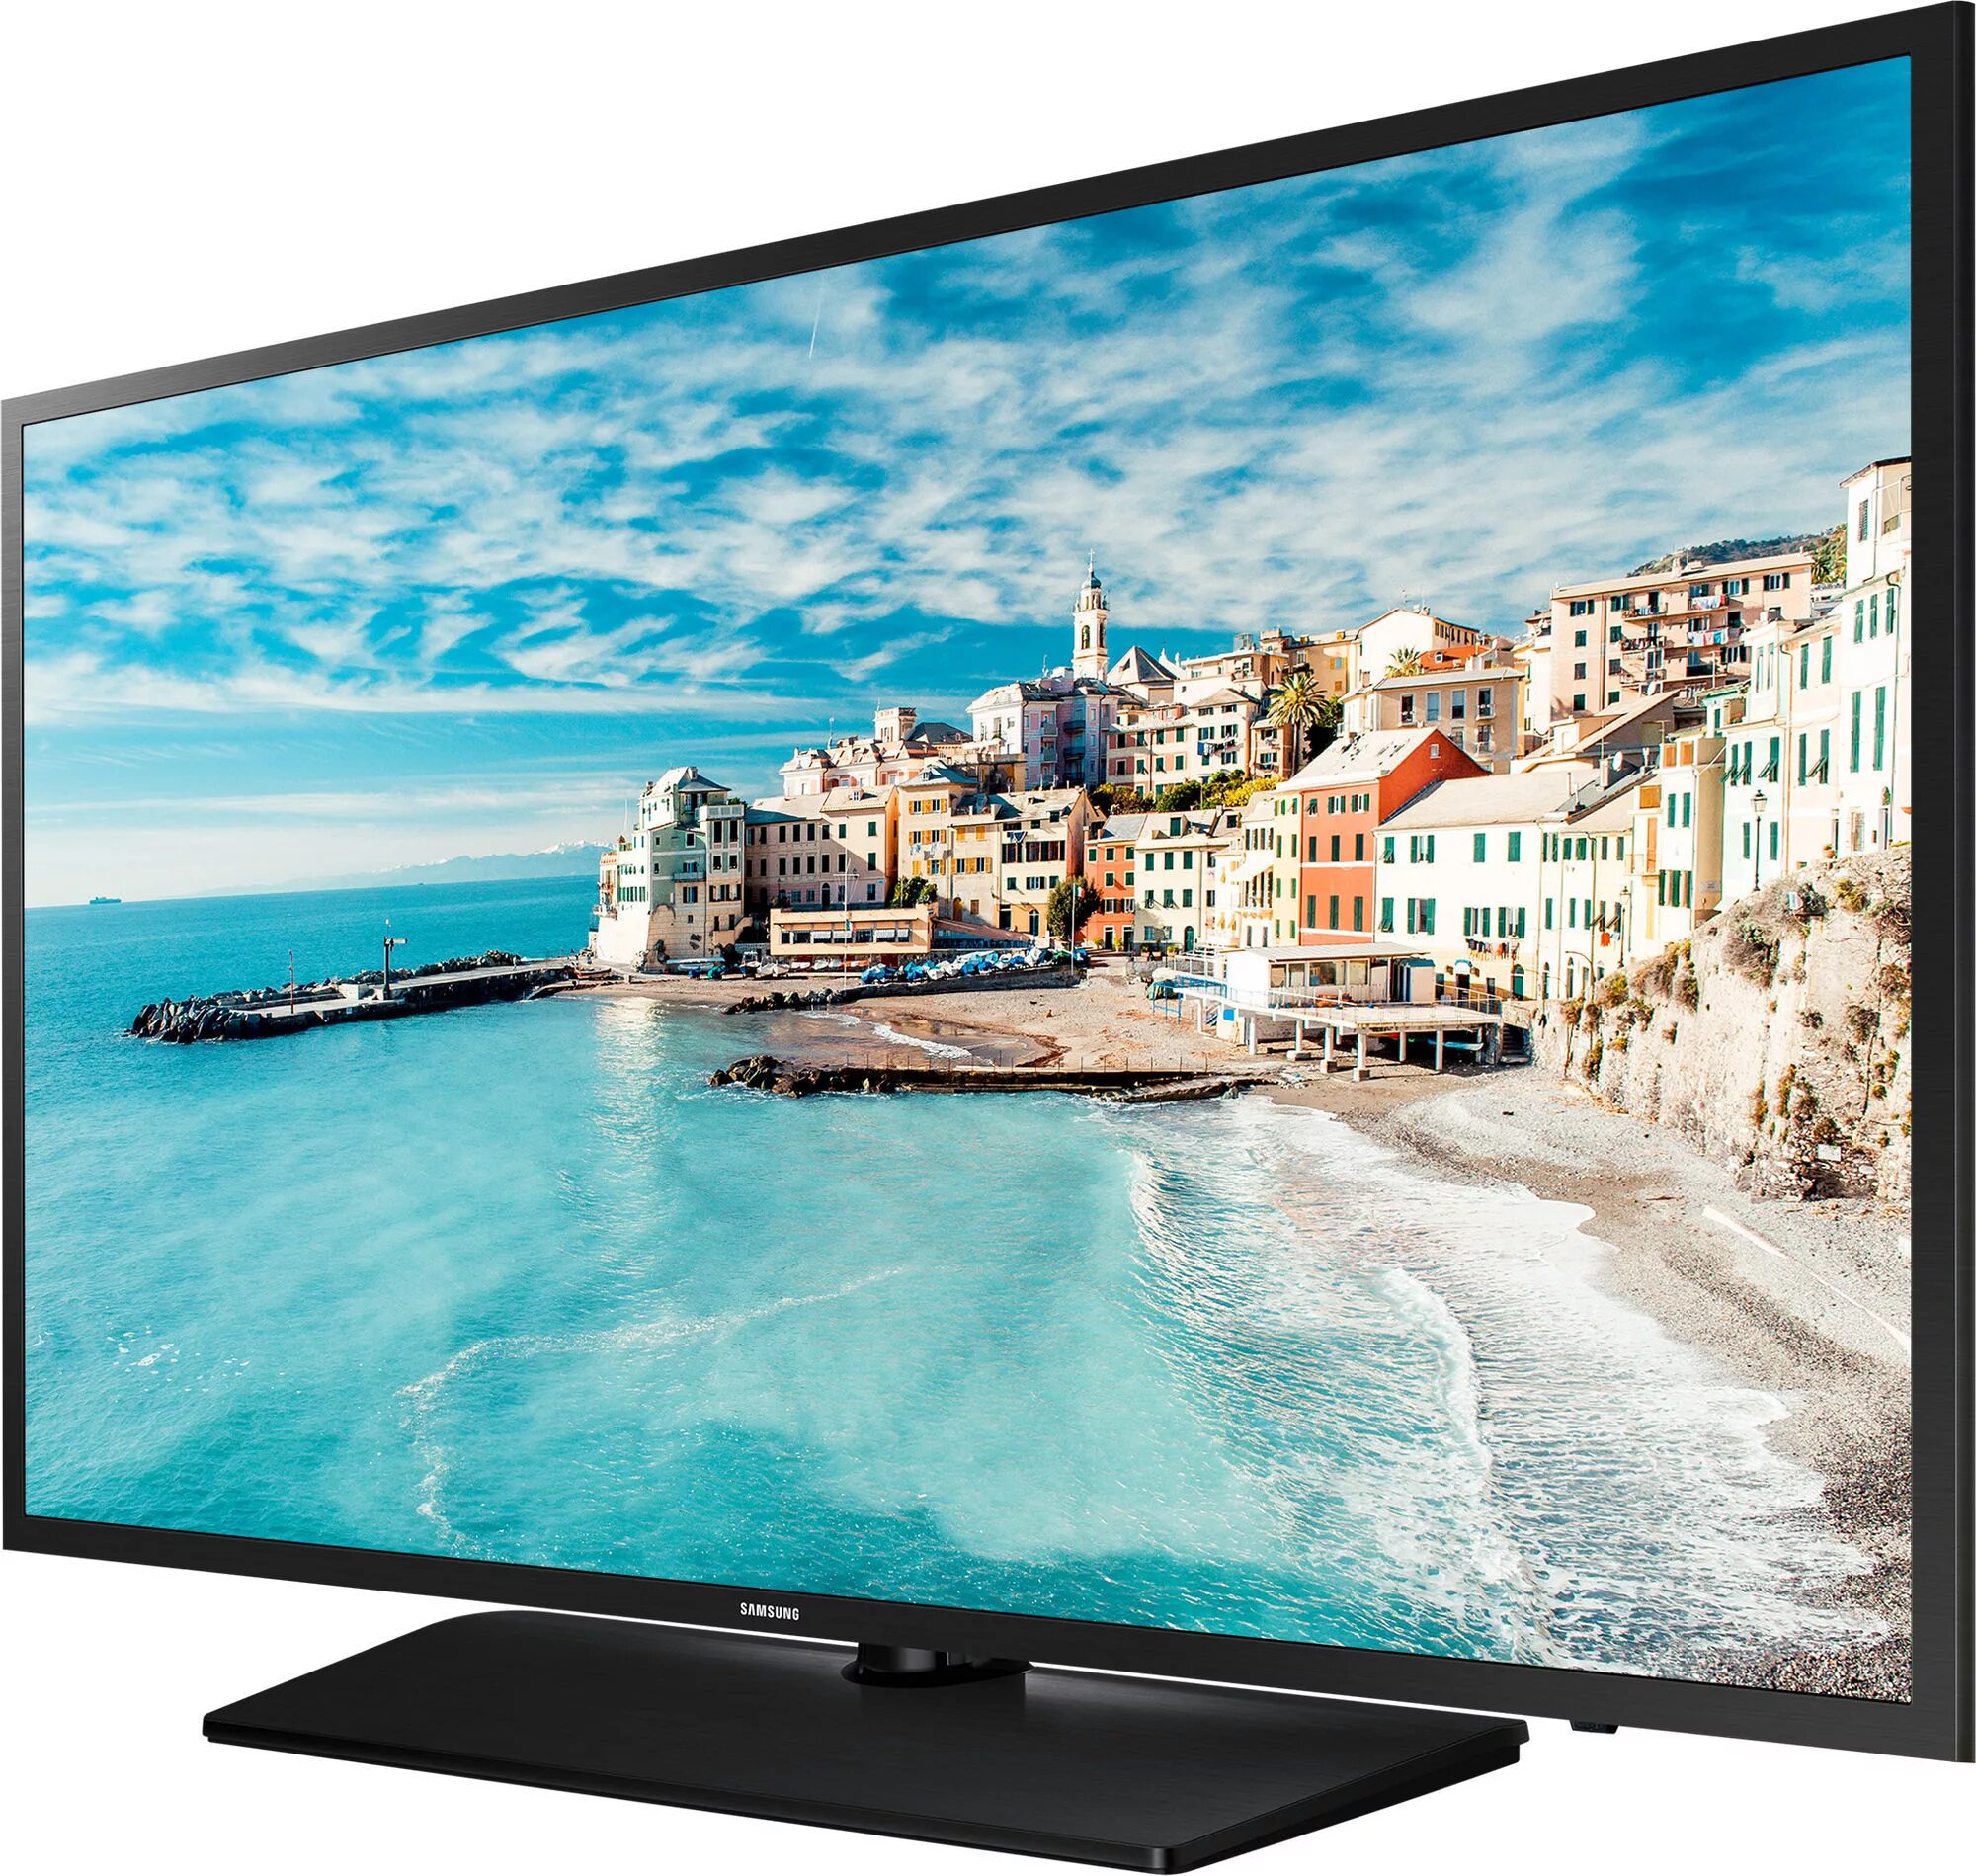 Телевизор купить в новгород недорого. Телевизор Samsung 32n4500. Телевизор самсунг 32n5000. Телевизор Samsung 32n4000. Телевизор самсунг 32 дюйма.